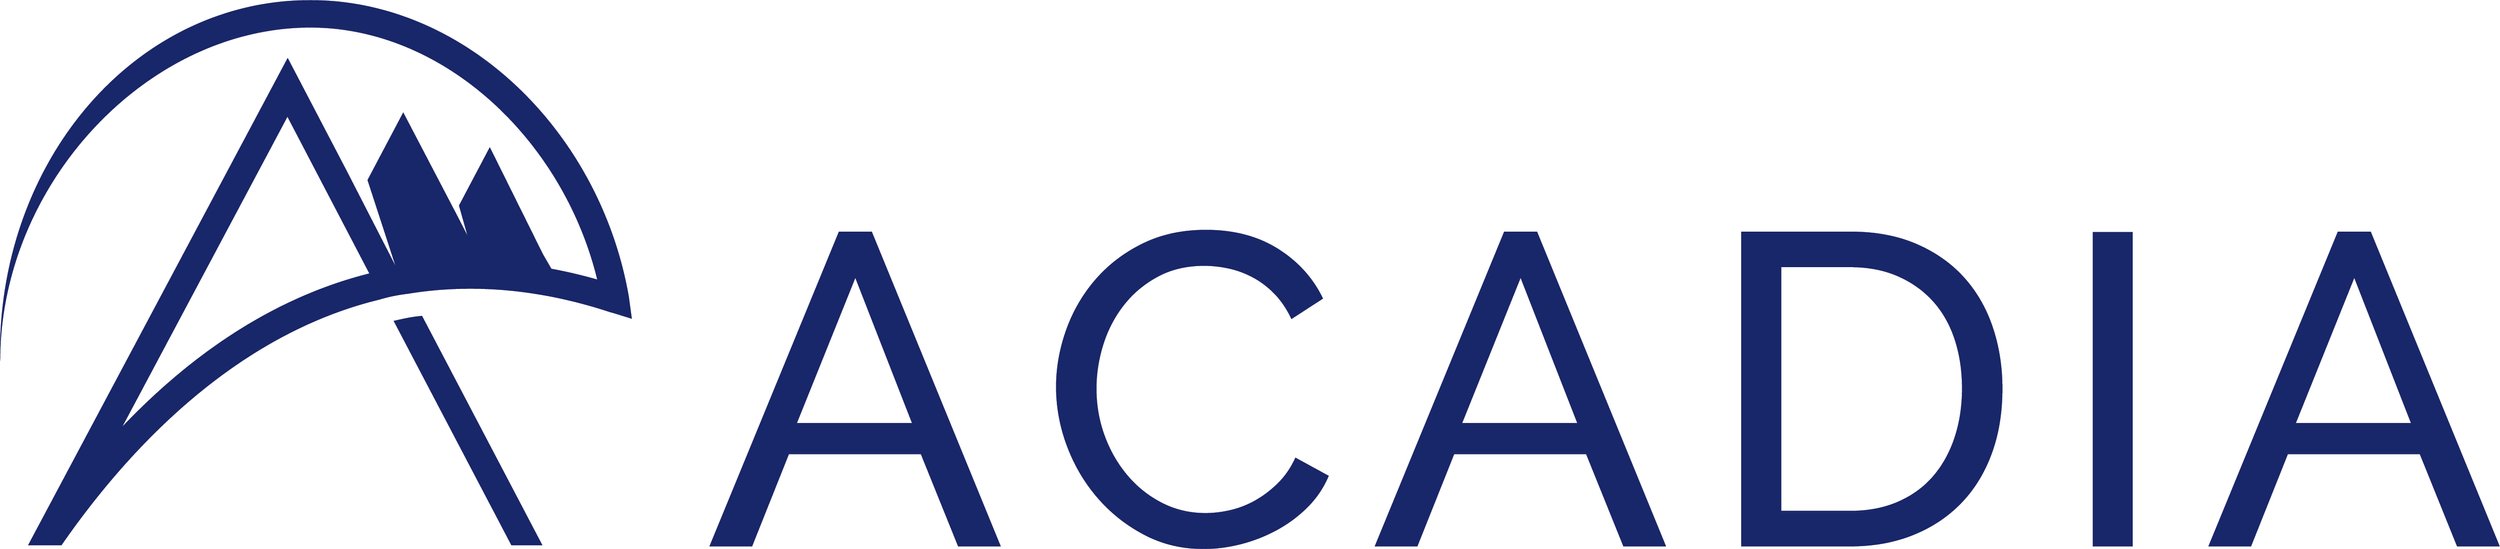 Acadia logo.jpg